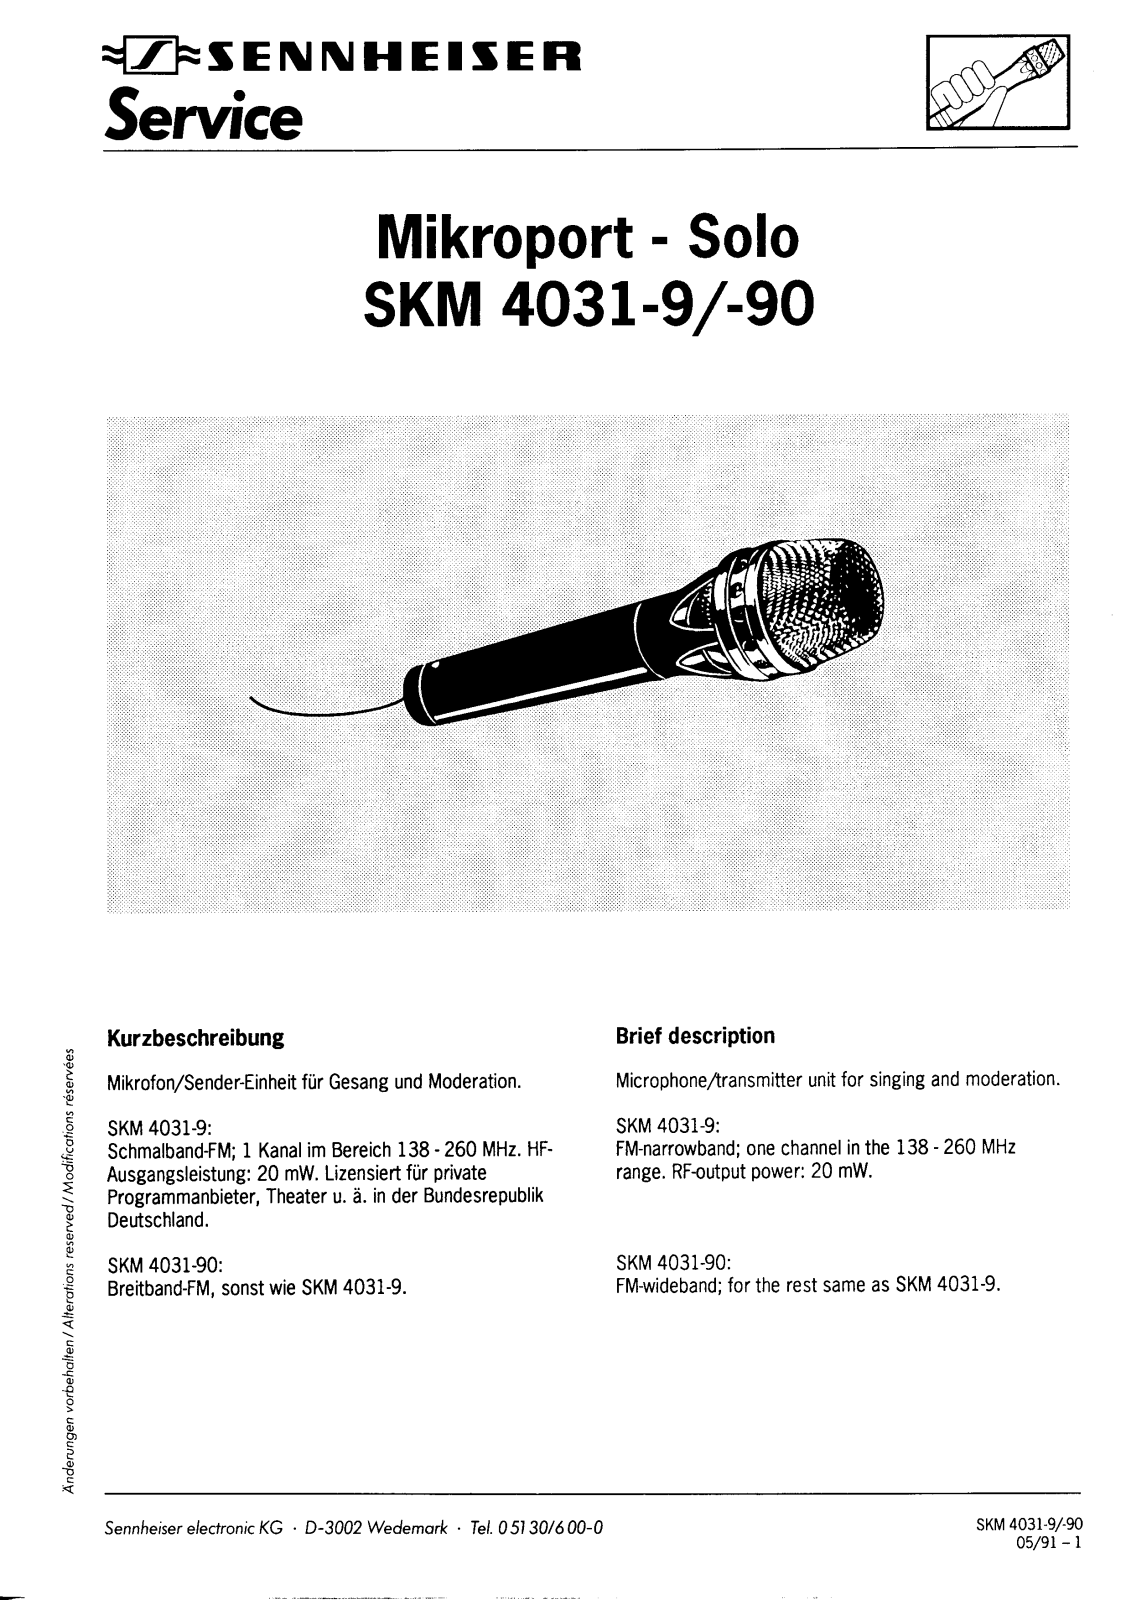 Sennheiser SKM 4031-90, SKM 4031-9 Service Manual